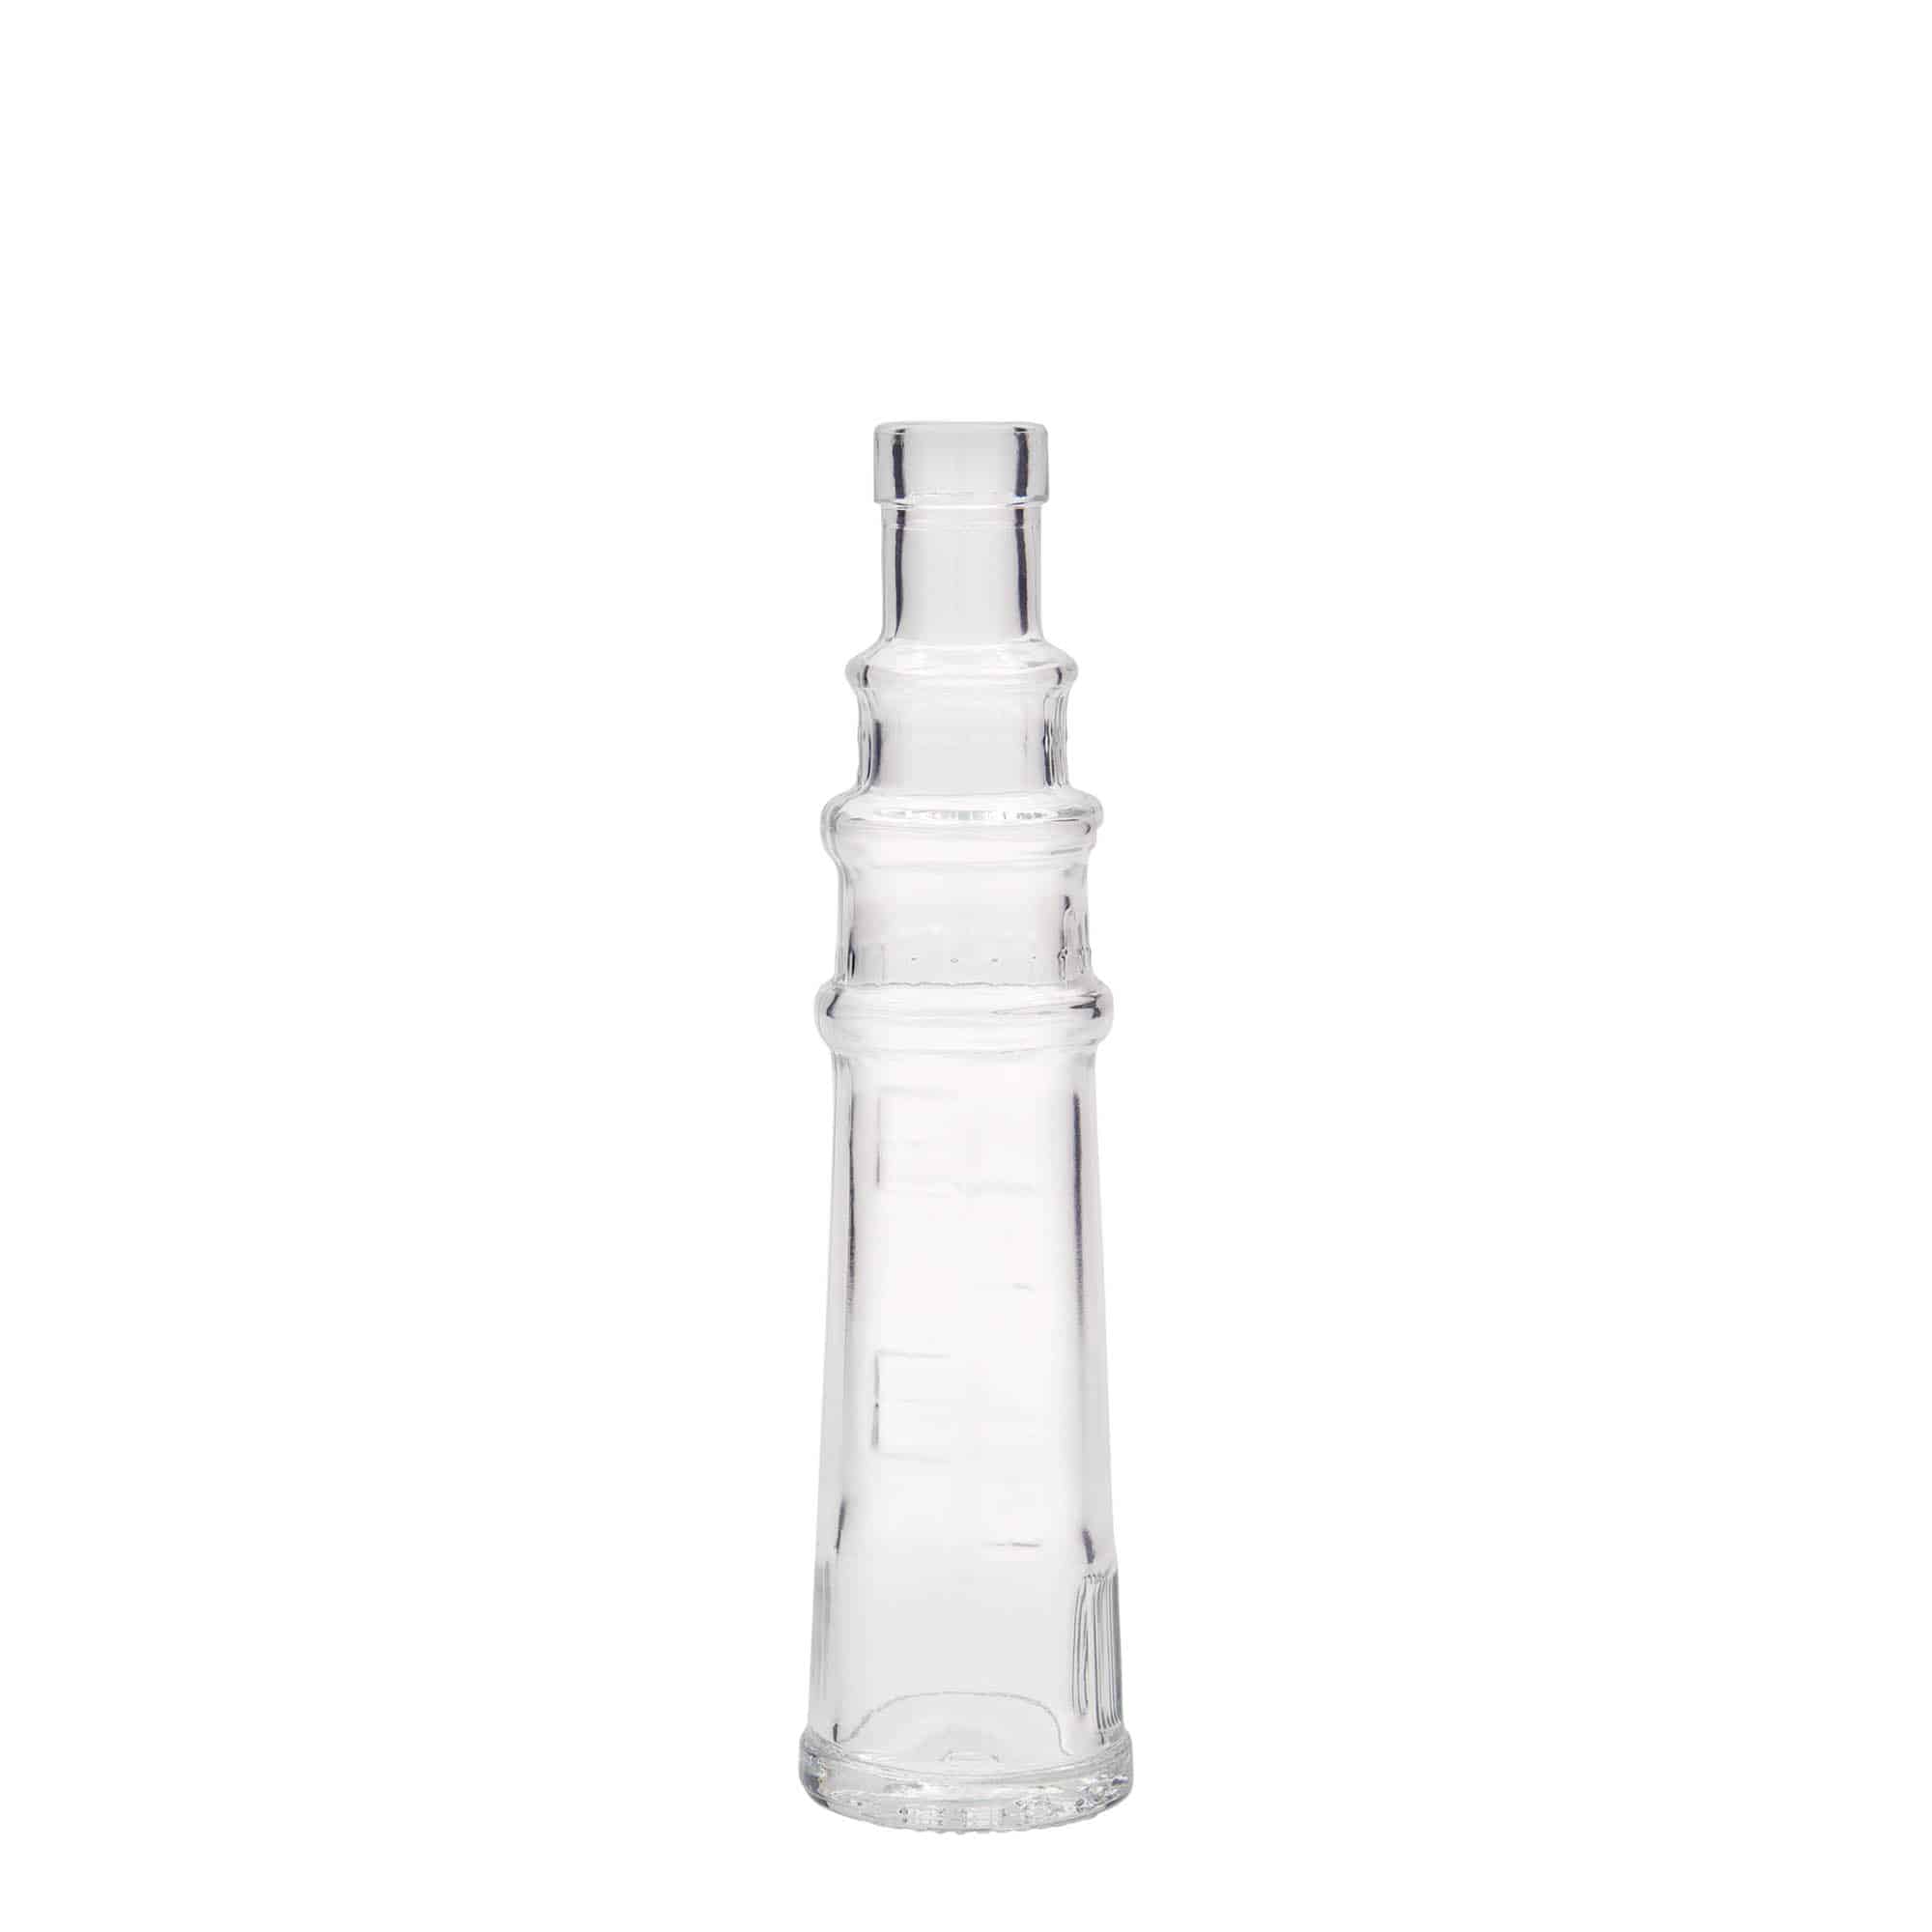 100 ml glass bottle 'Lighthouse', closure: cork